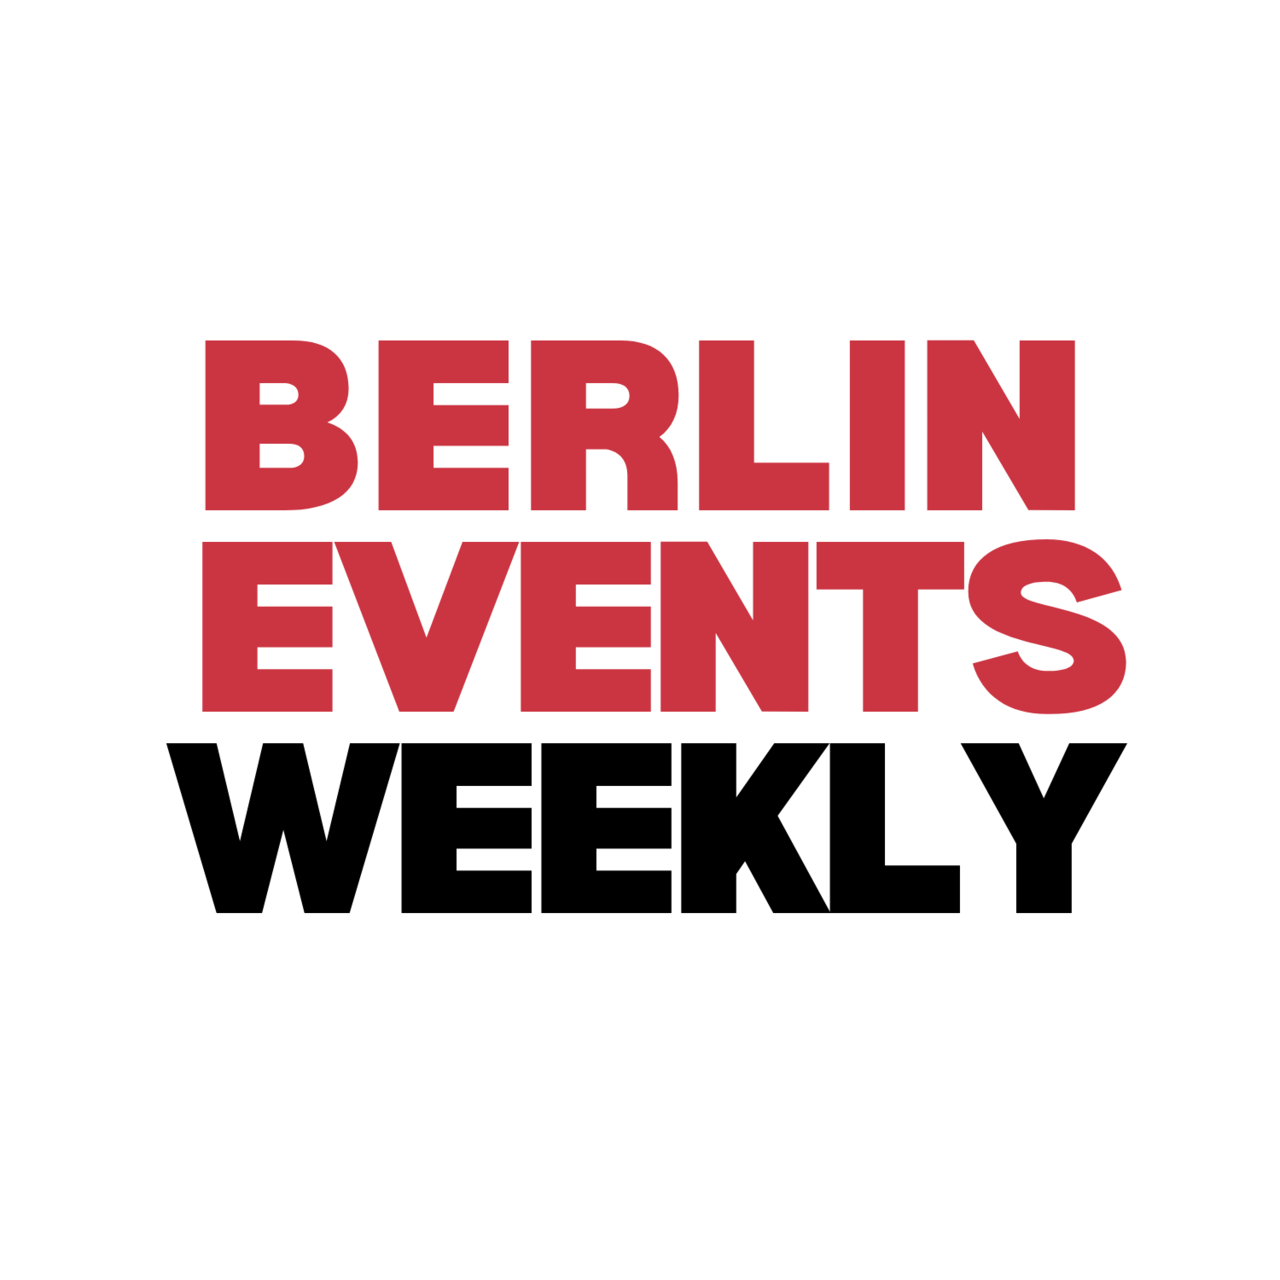 Berlin Events Weekly